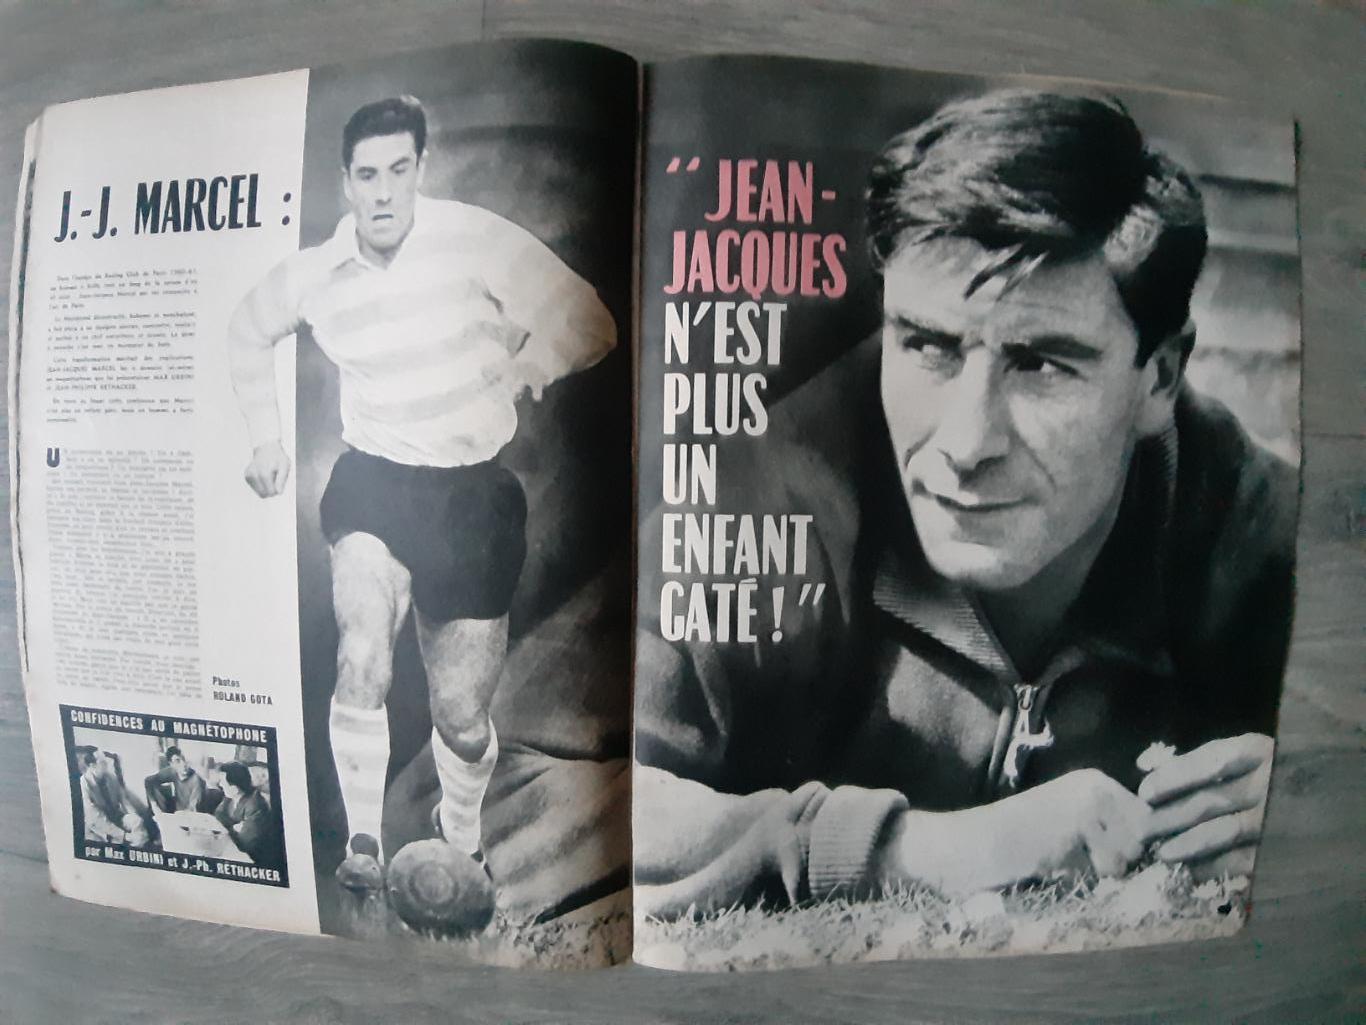 Football Magazine1961 6